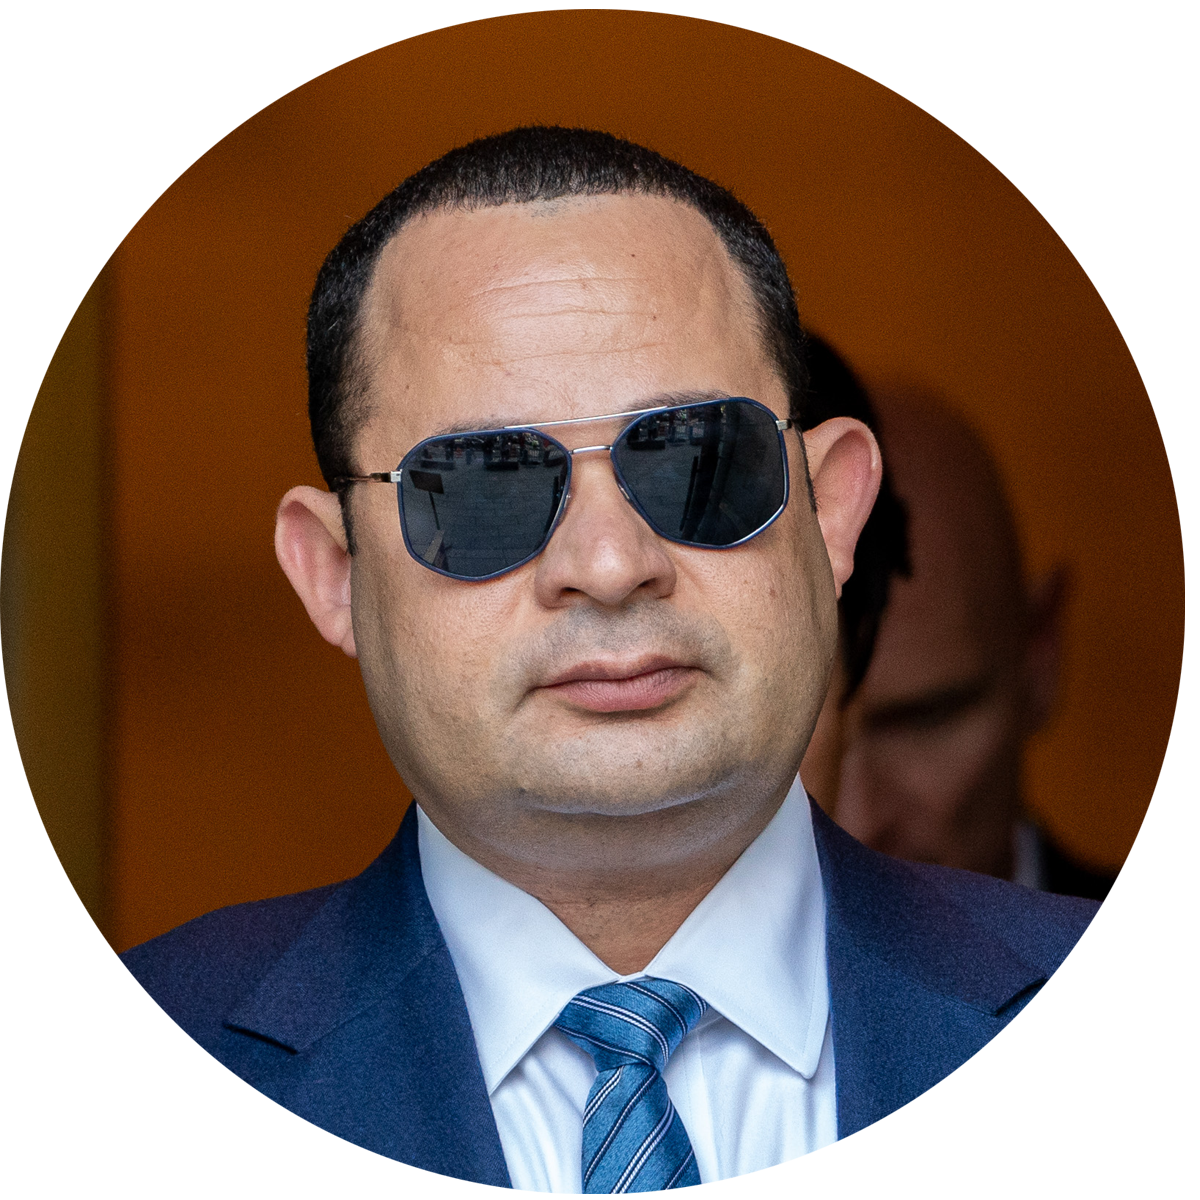 Wael Hana, the New Jersey businessman indicted in a bribery scheme alongside Senator Bob Menendez